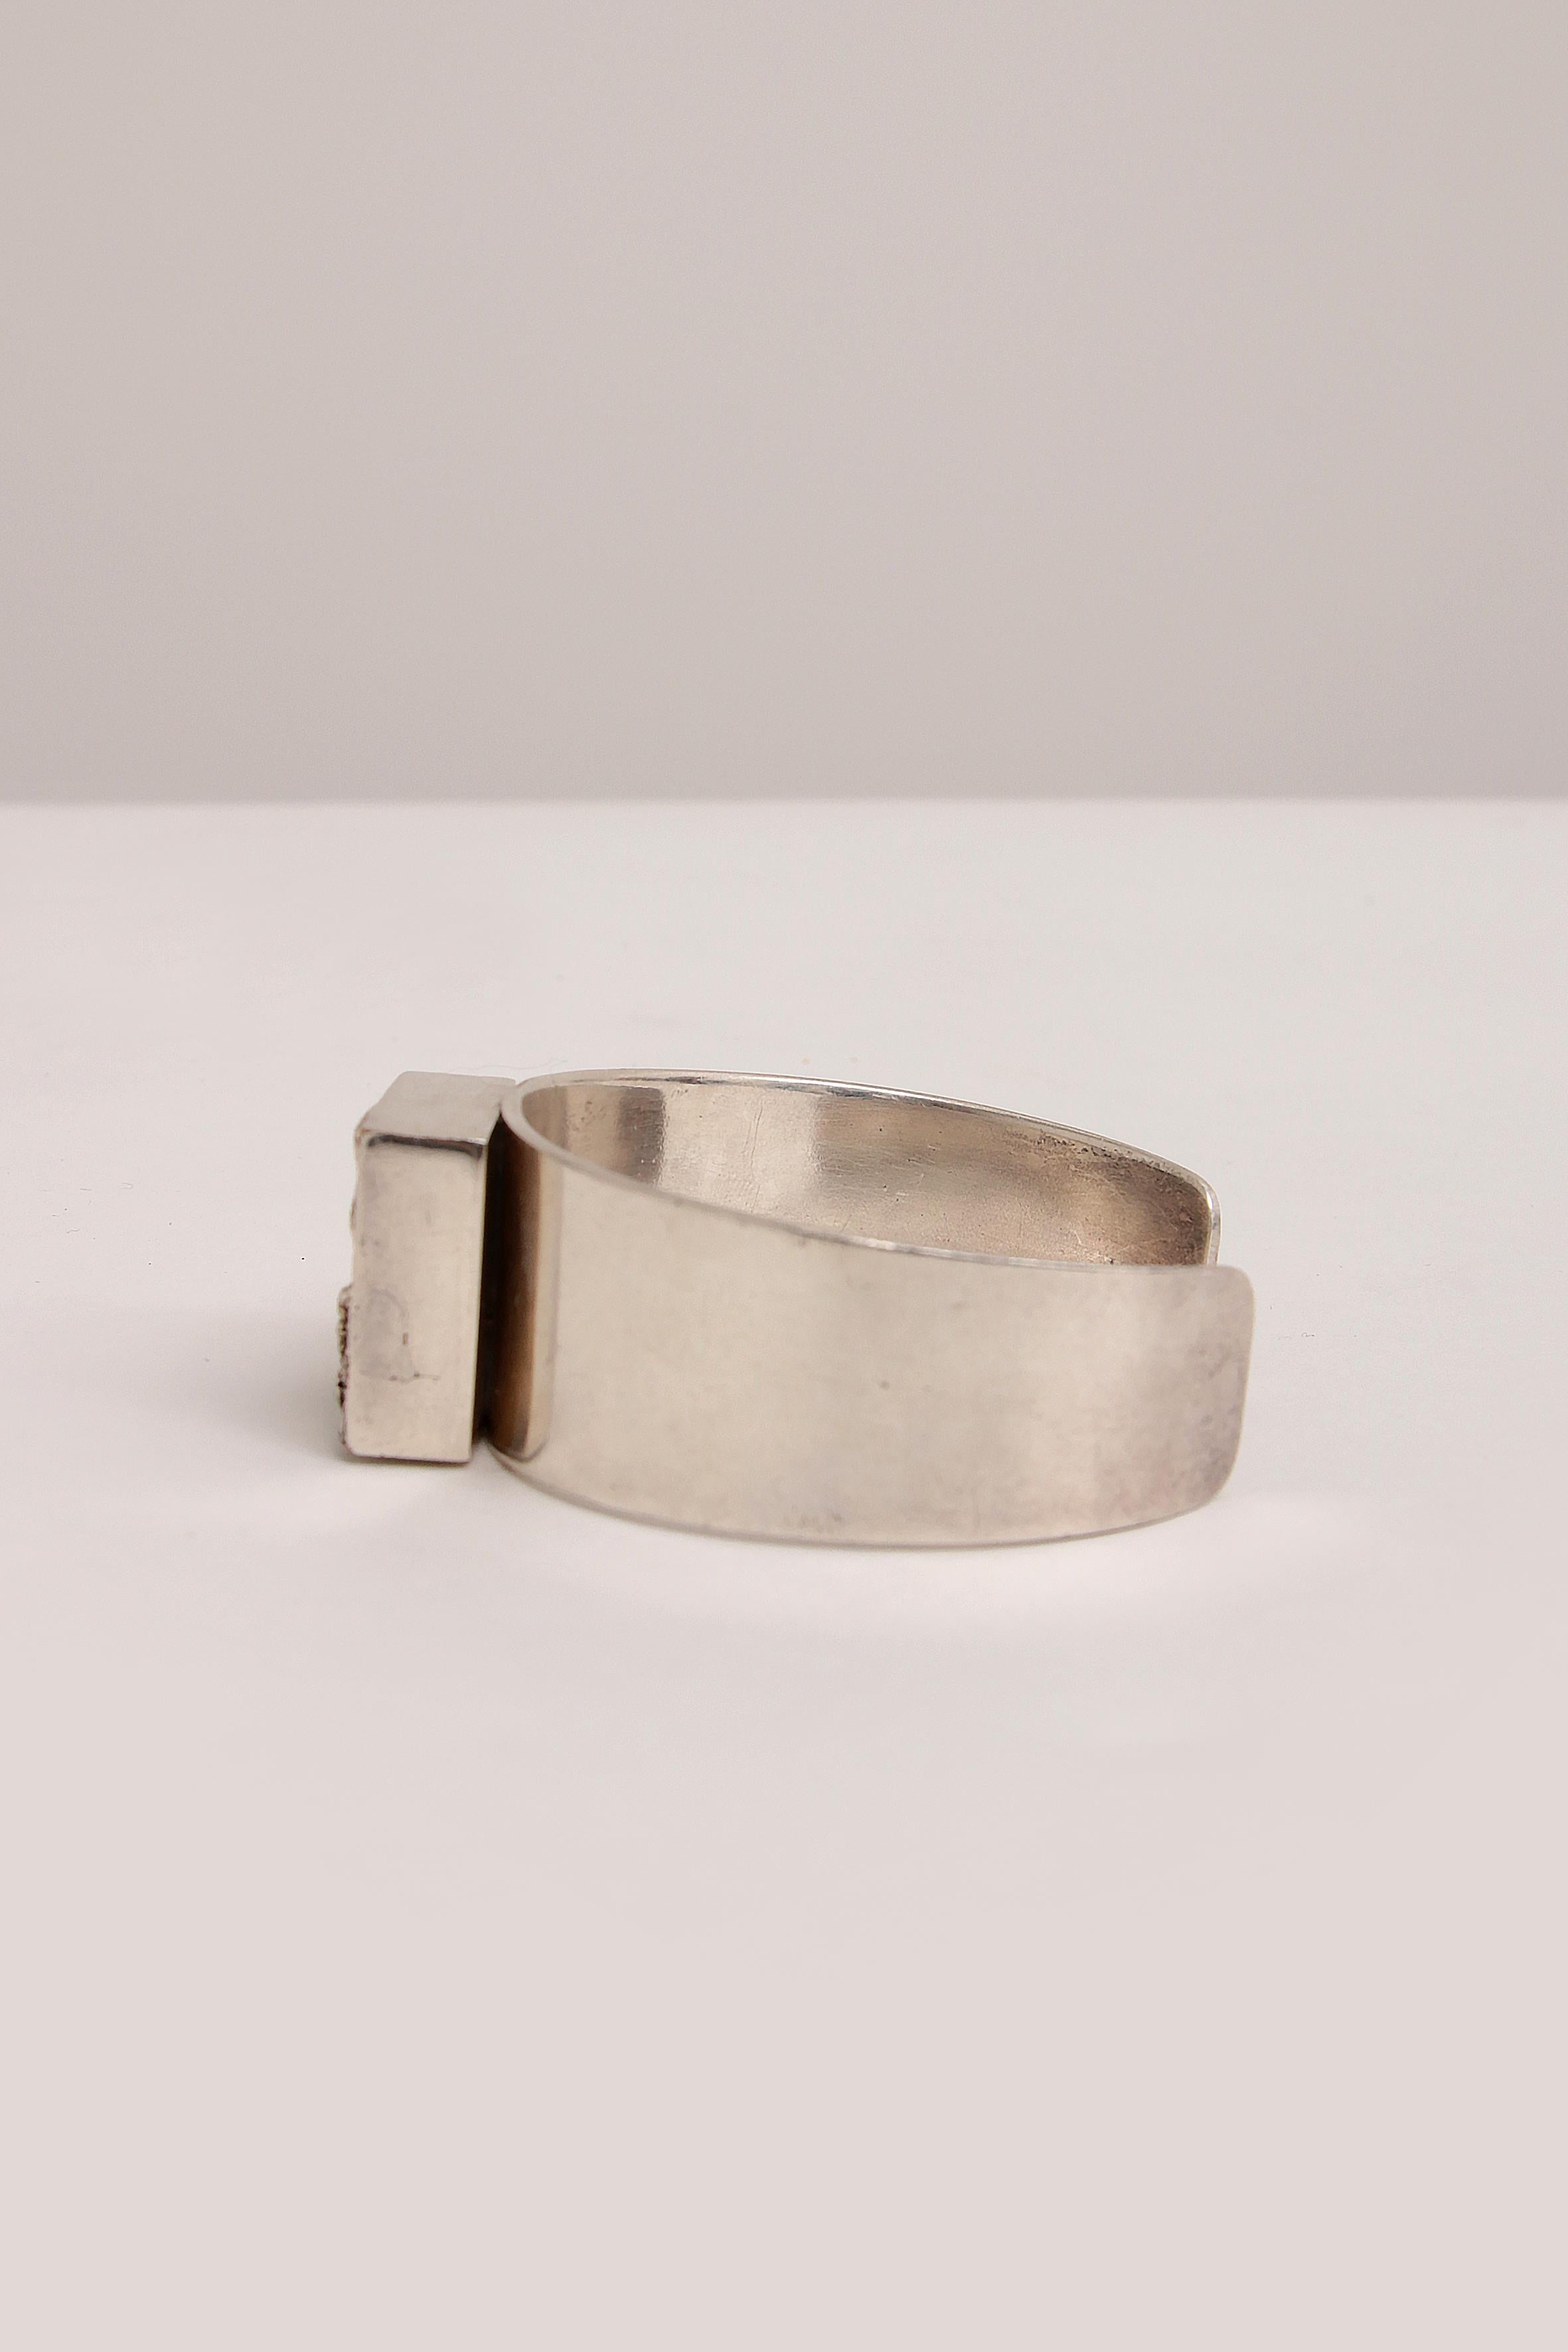 Modern Silver-plated bracelet with glass stone by Dansk Smykkekunst, 1970 Denmark. For Sale